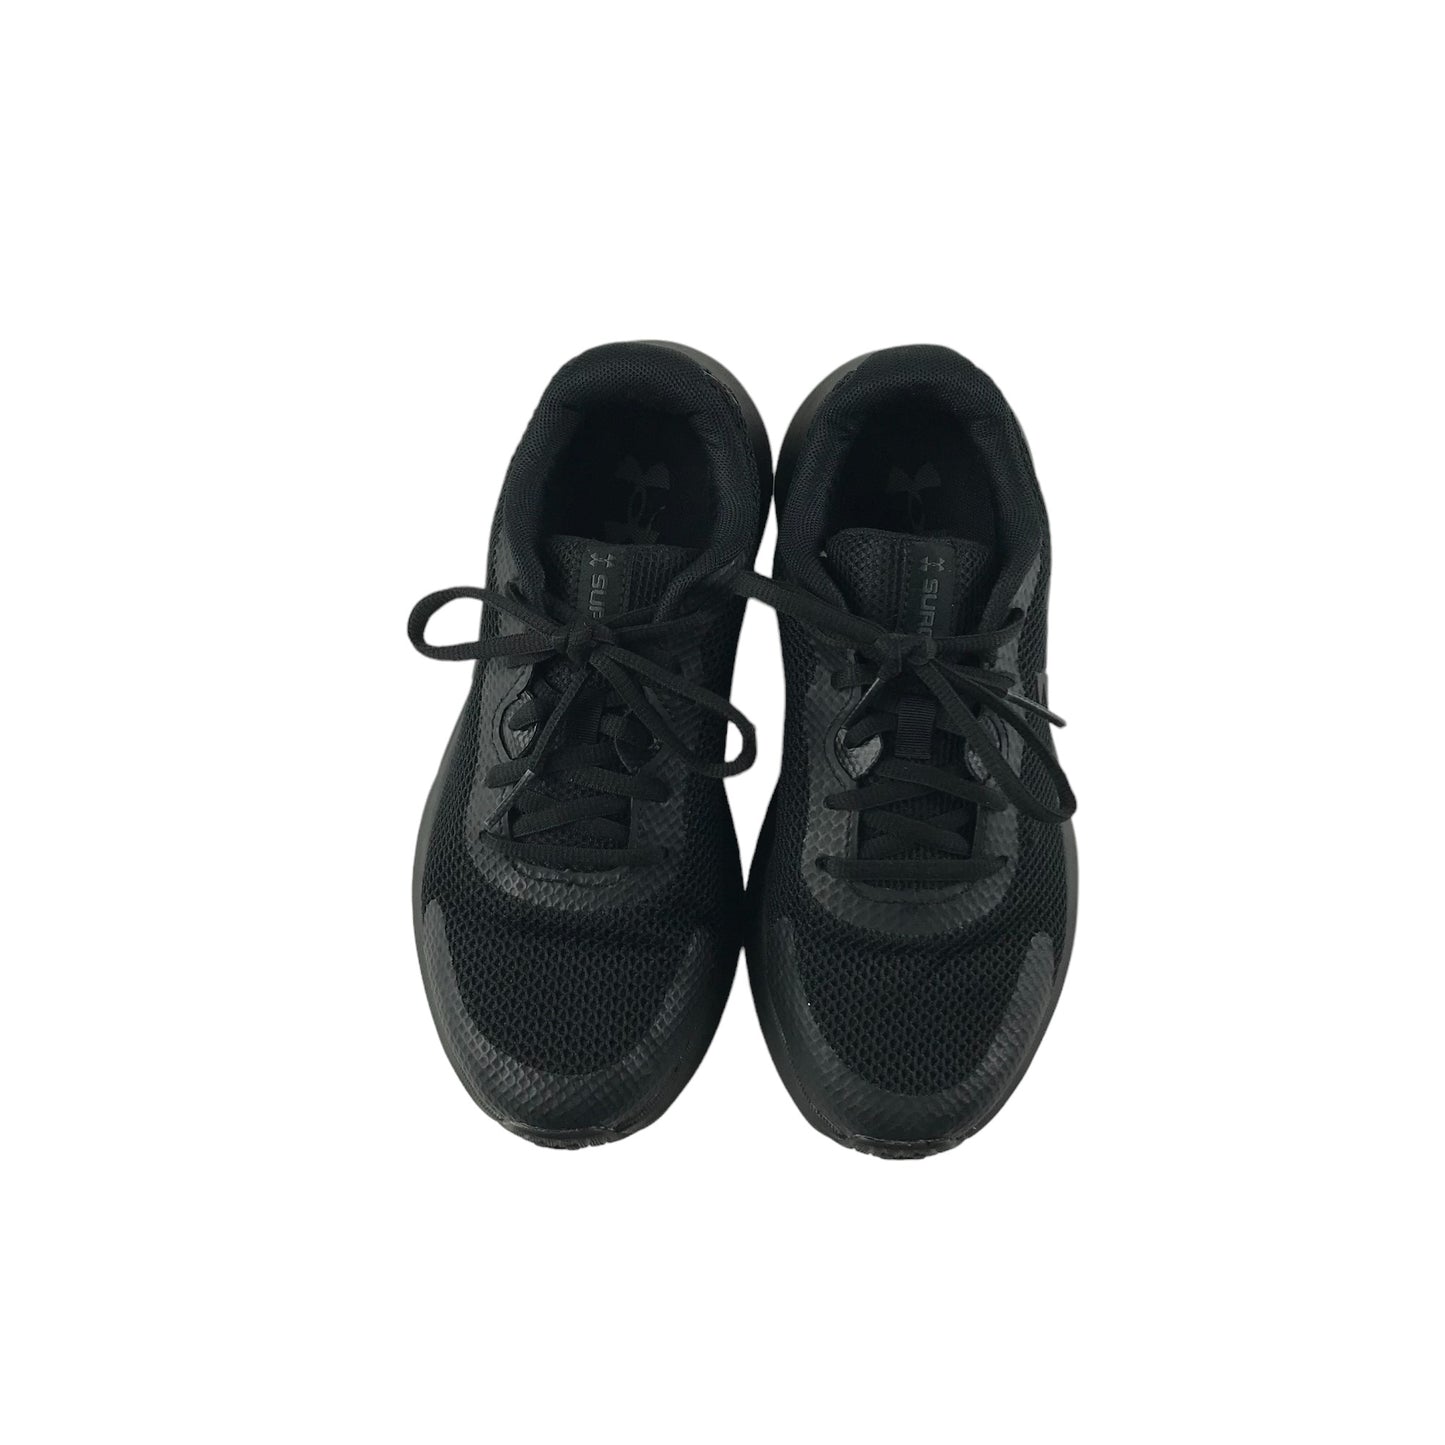 Under Armour Surge Trainers Shoe Size 5 Black with Laces